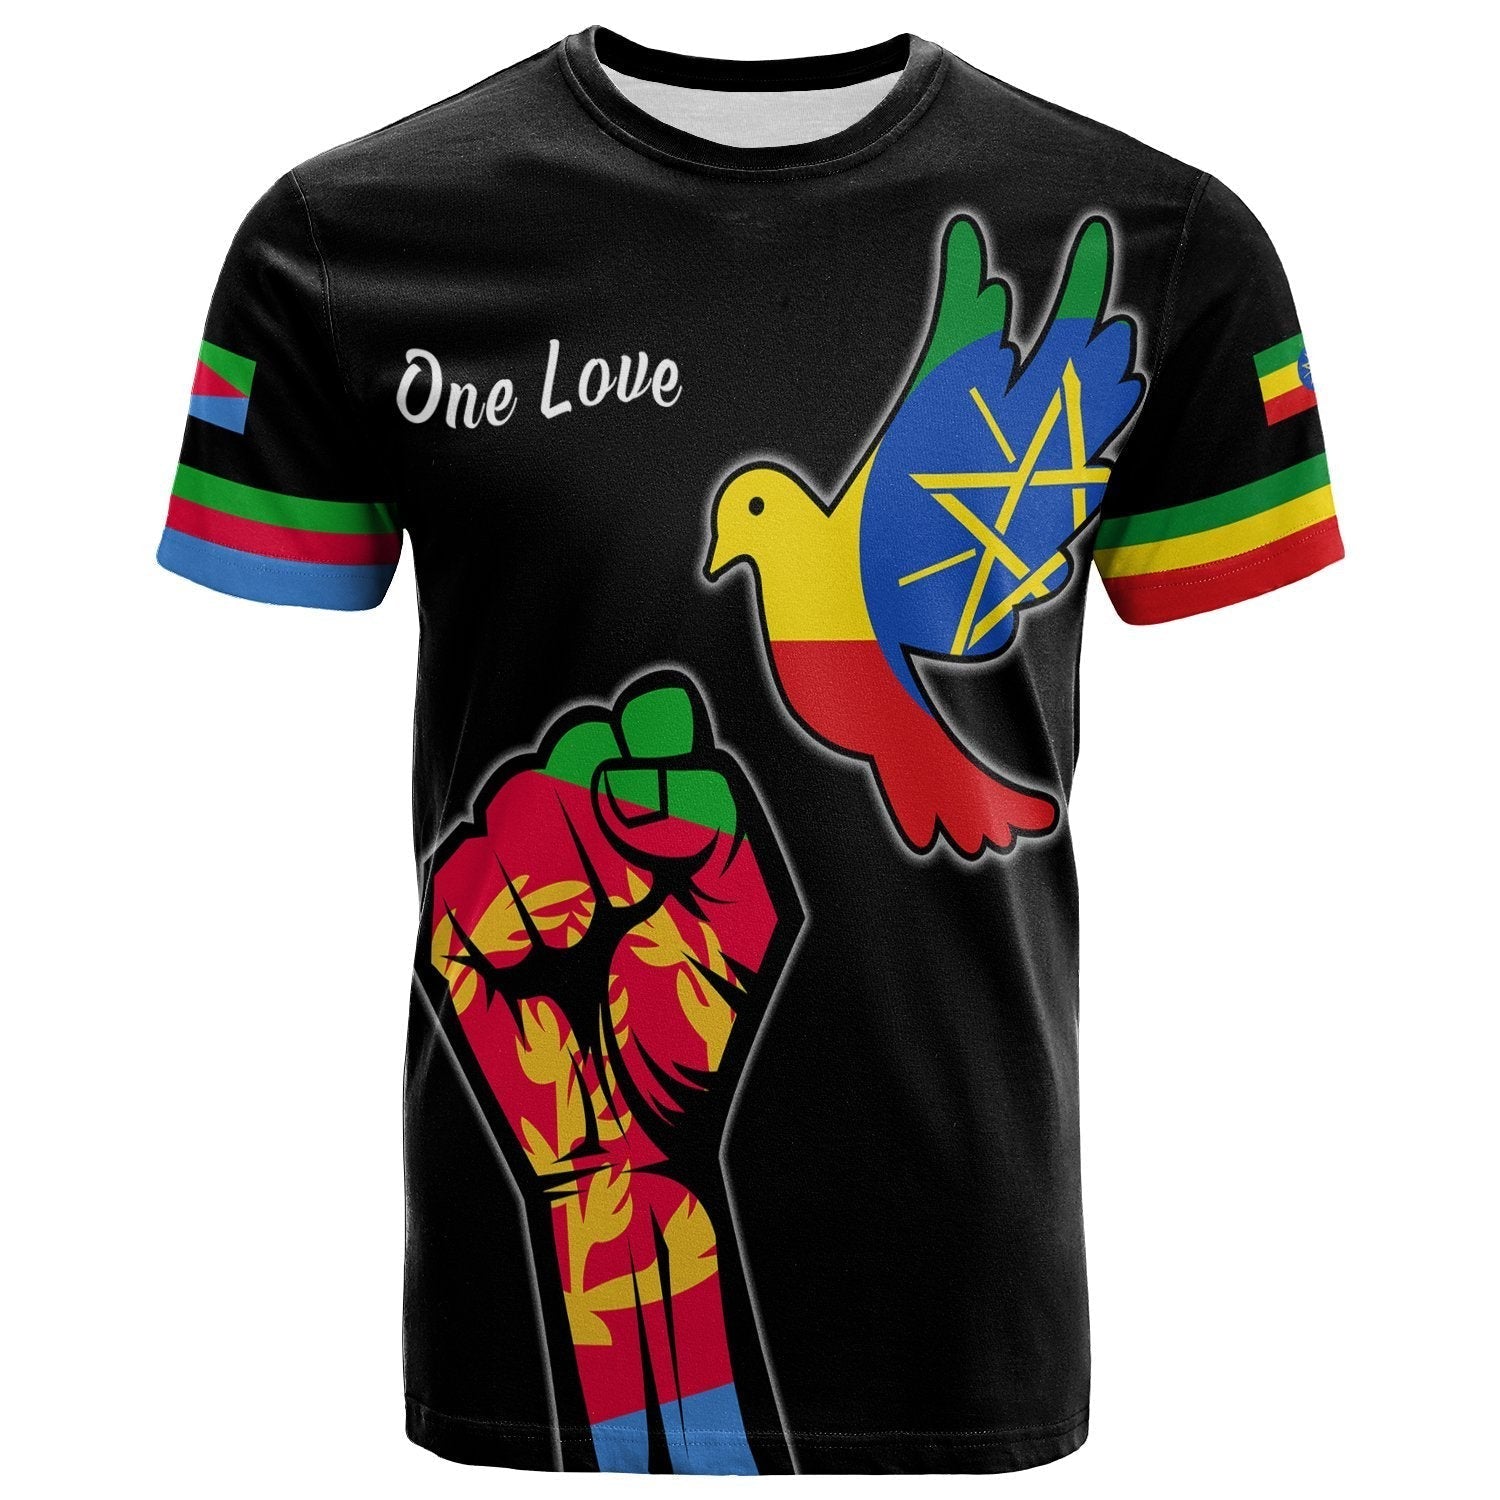 ethiopia-and-eritrea-t-shirt-one-love